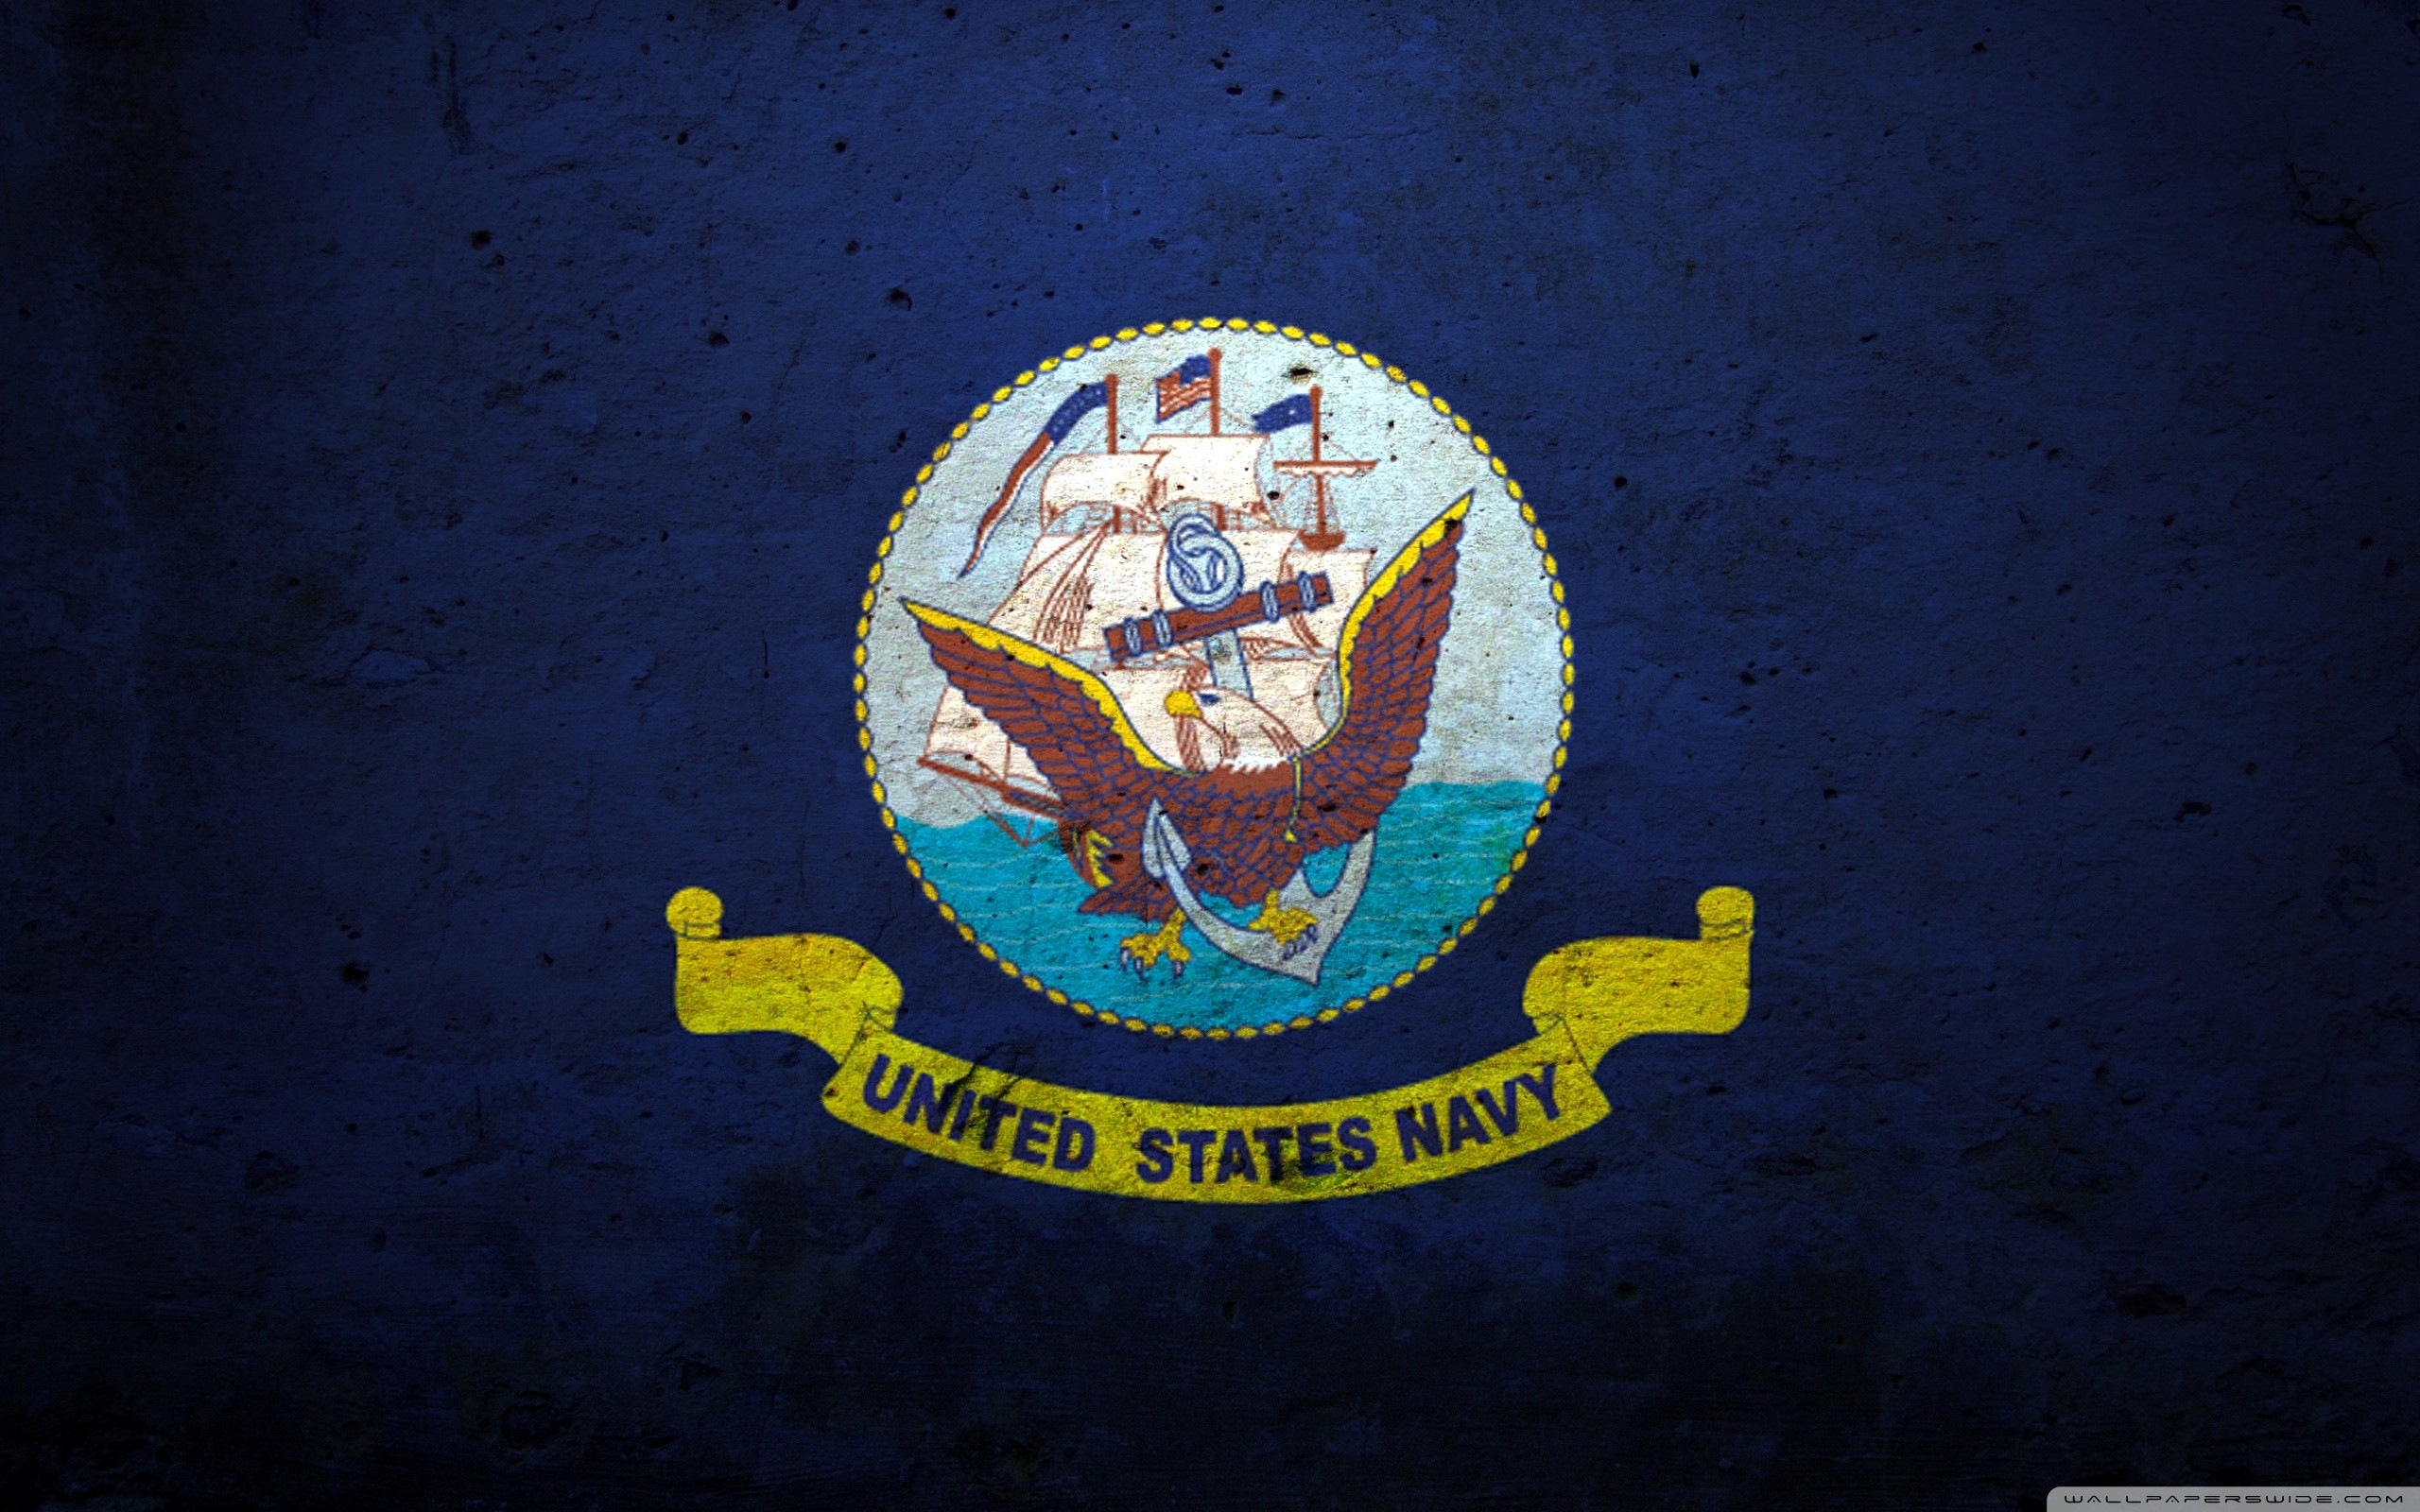 2560x1600 10 Best United States Navy Wallpaper FULL HD 1920Ã1080 For PC Background